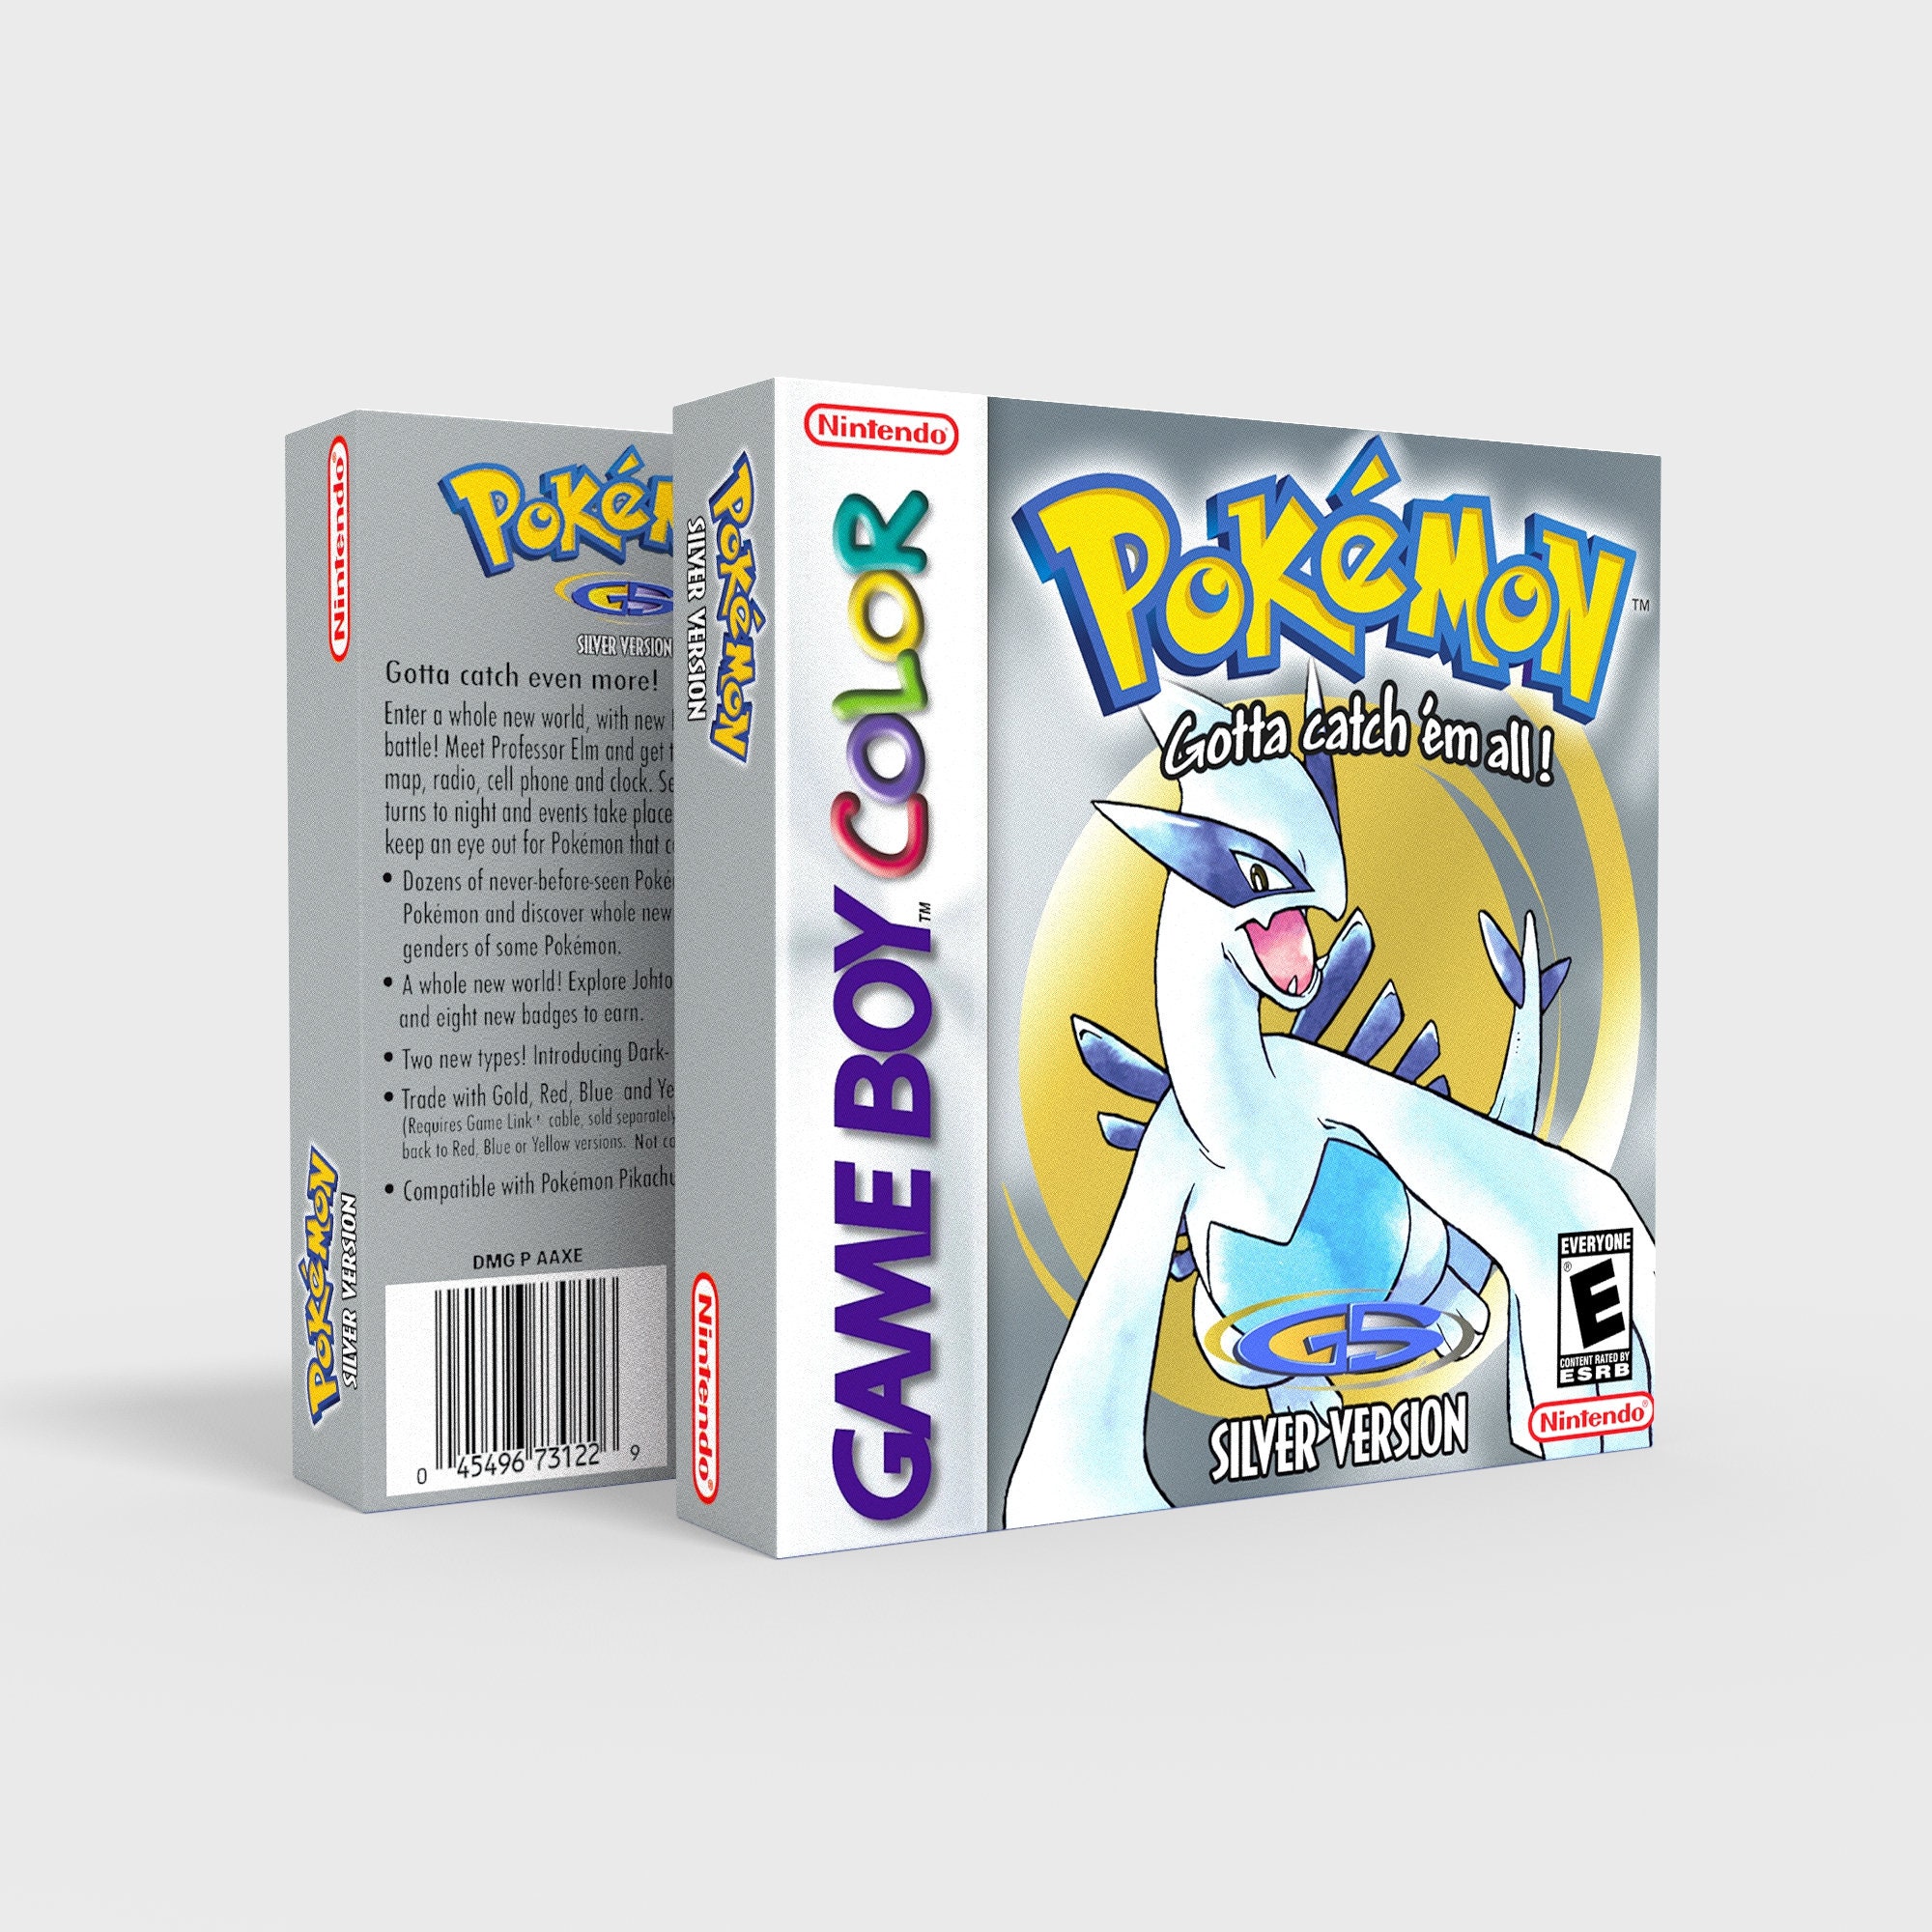 Pokemon Silver Version, Game Boy Color